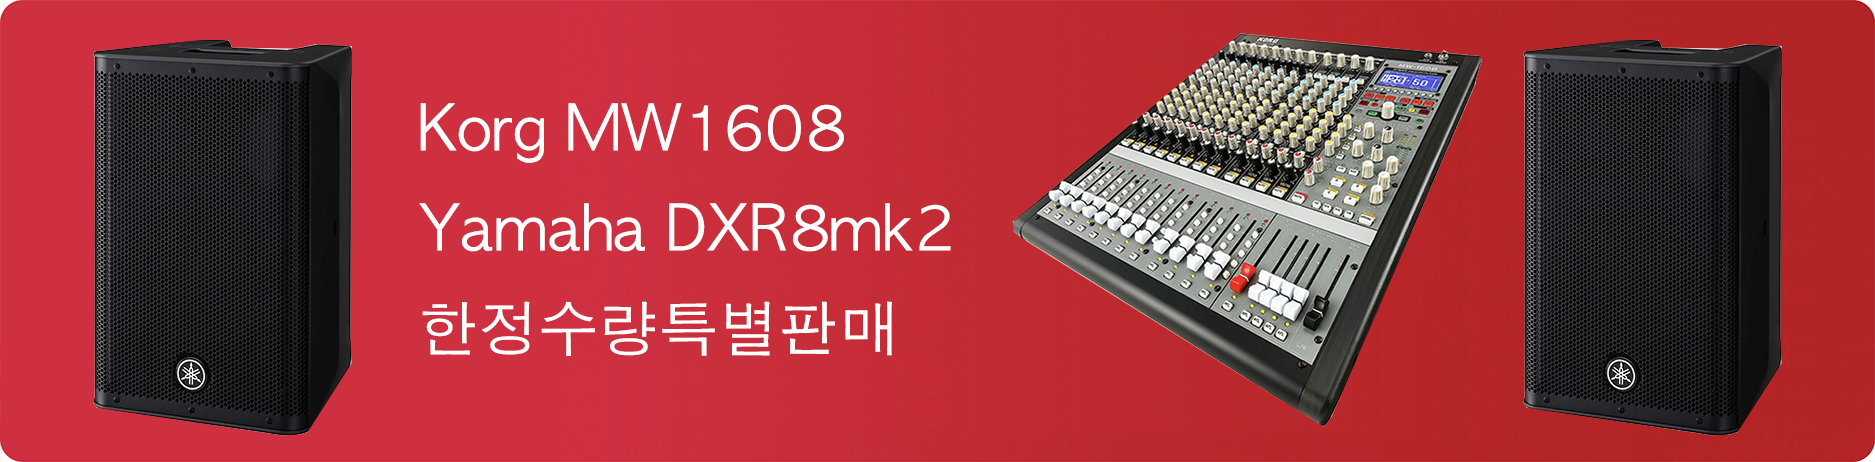 Korg MW1608 + Yamaha DXR8mk2 1조 특별판매